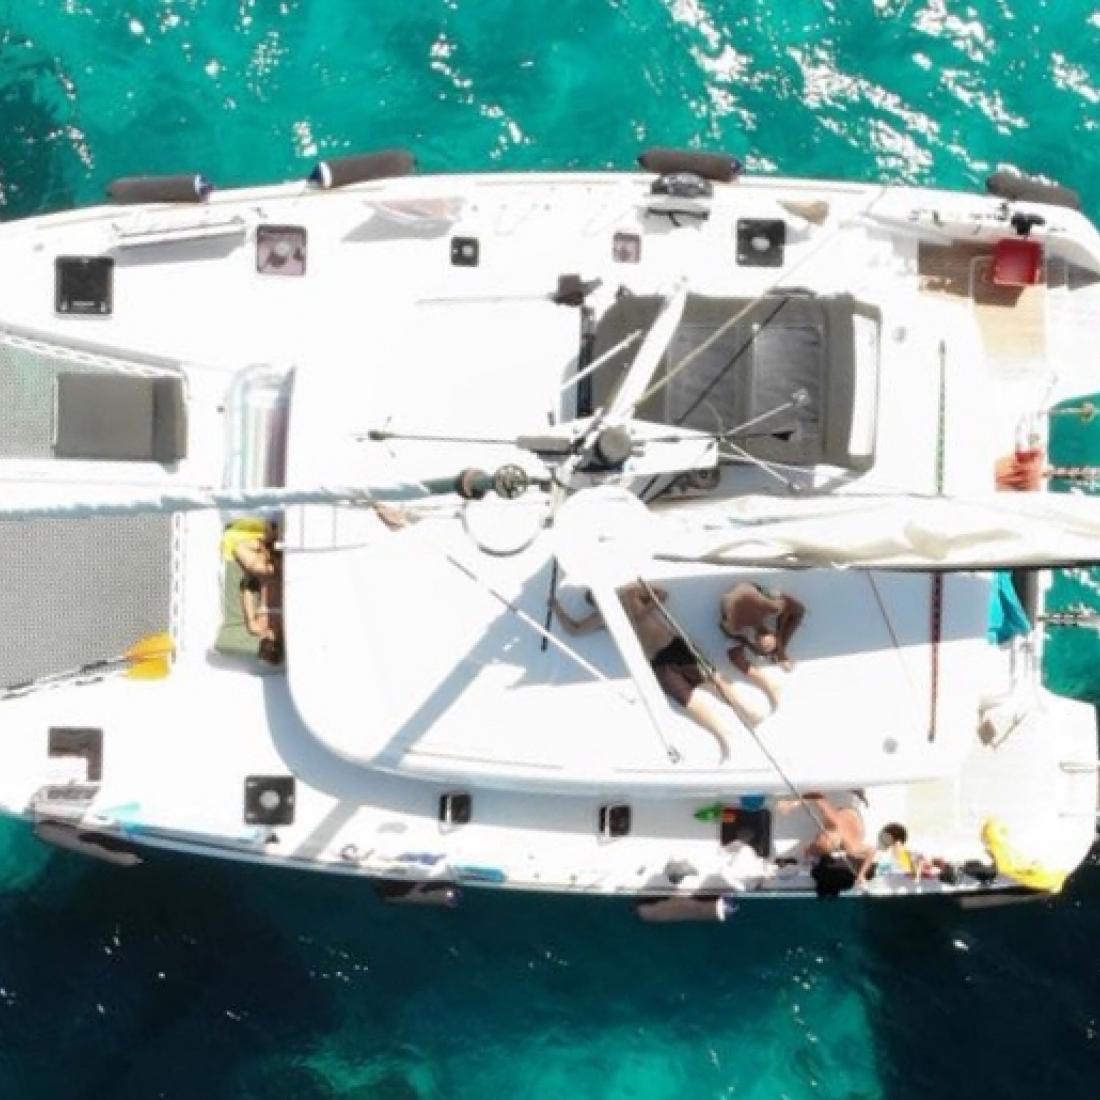 lagoon catamarano punta ala toscana charter barca vela skipper vacanze italia